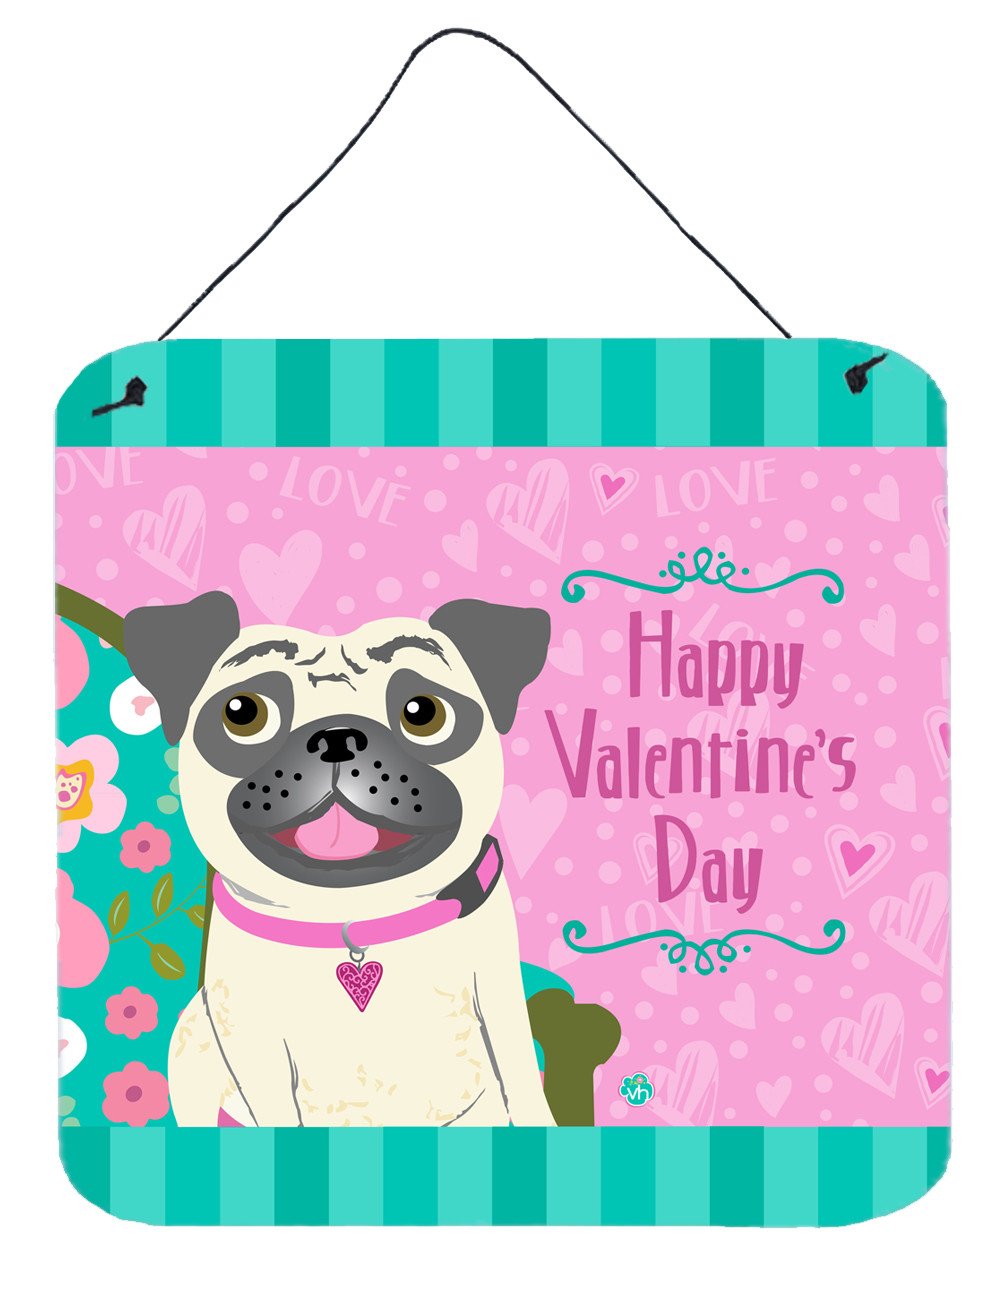 Happy Valentine's Day Pug Wall or Door Hanging Prints VHA3002DS66 by Caroline's Treasures